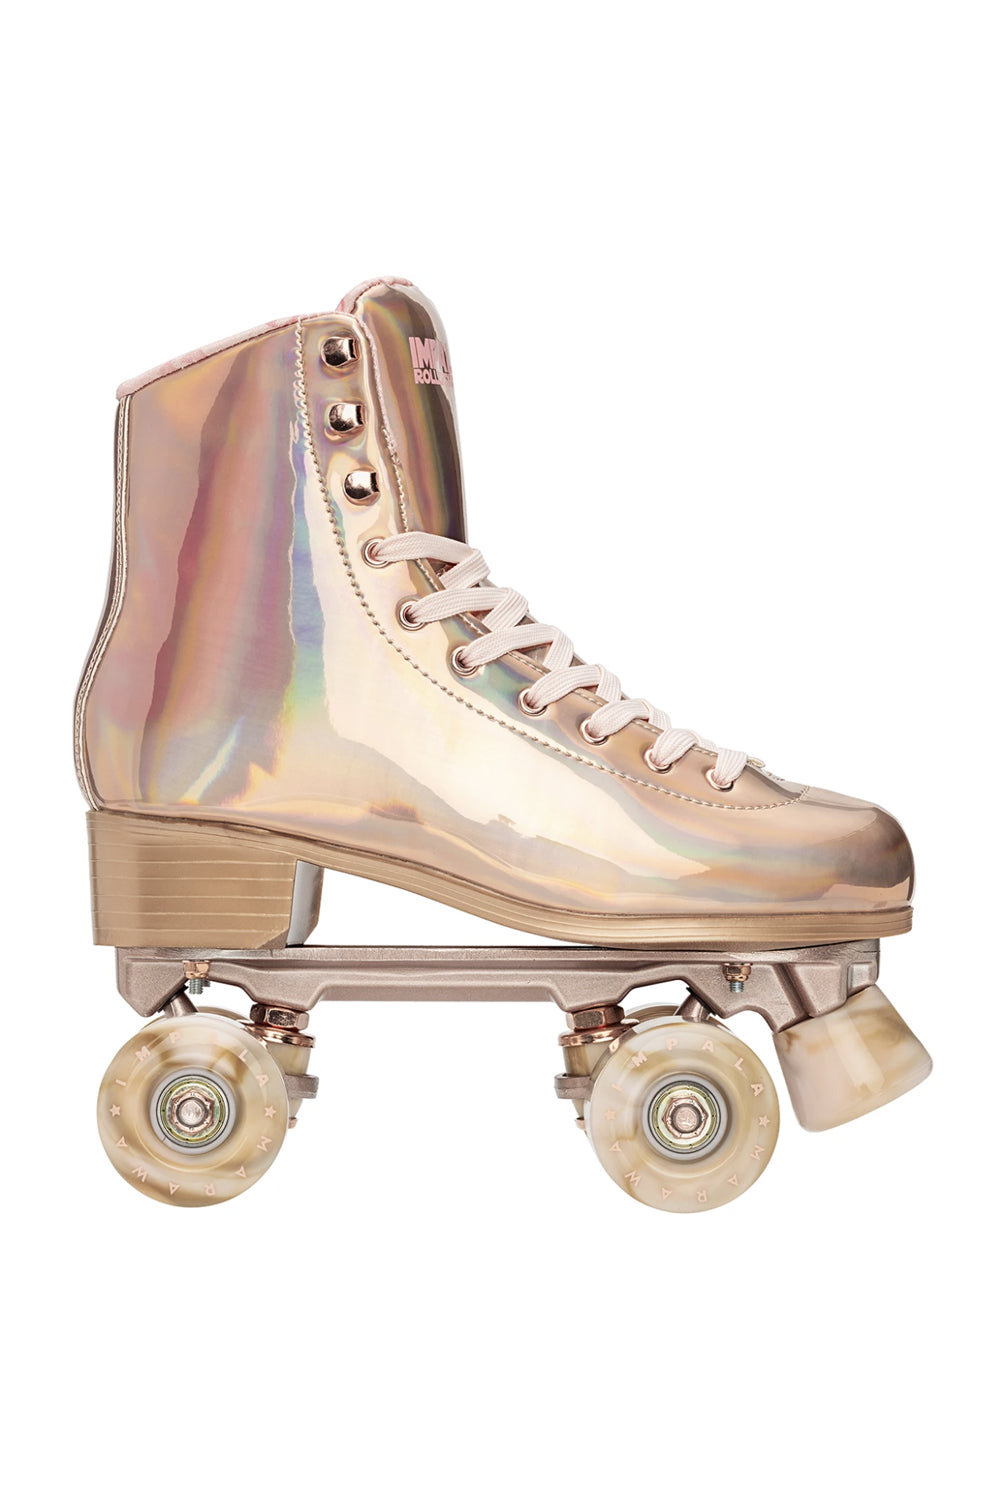 Impala Roller Skates - Rose Gold